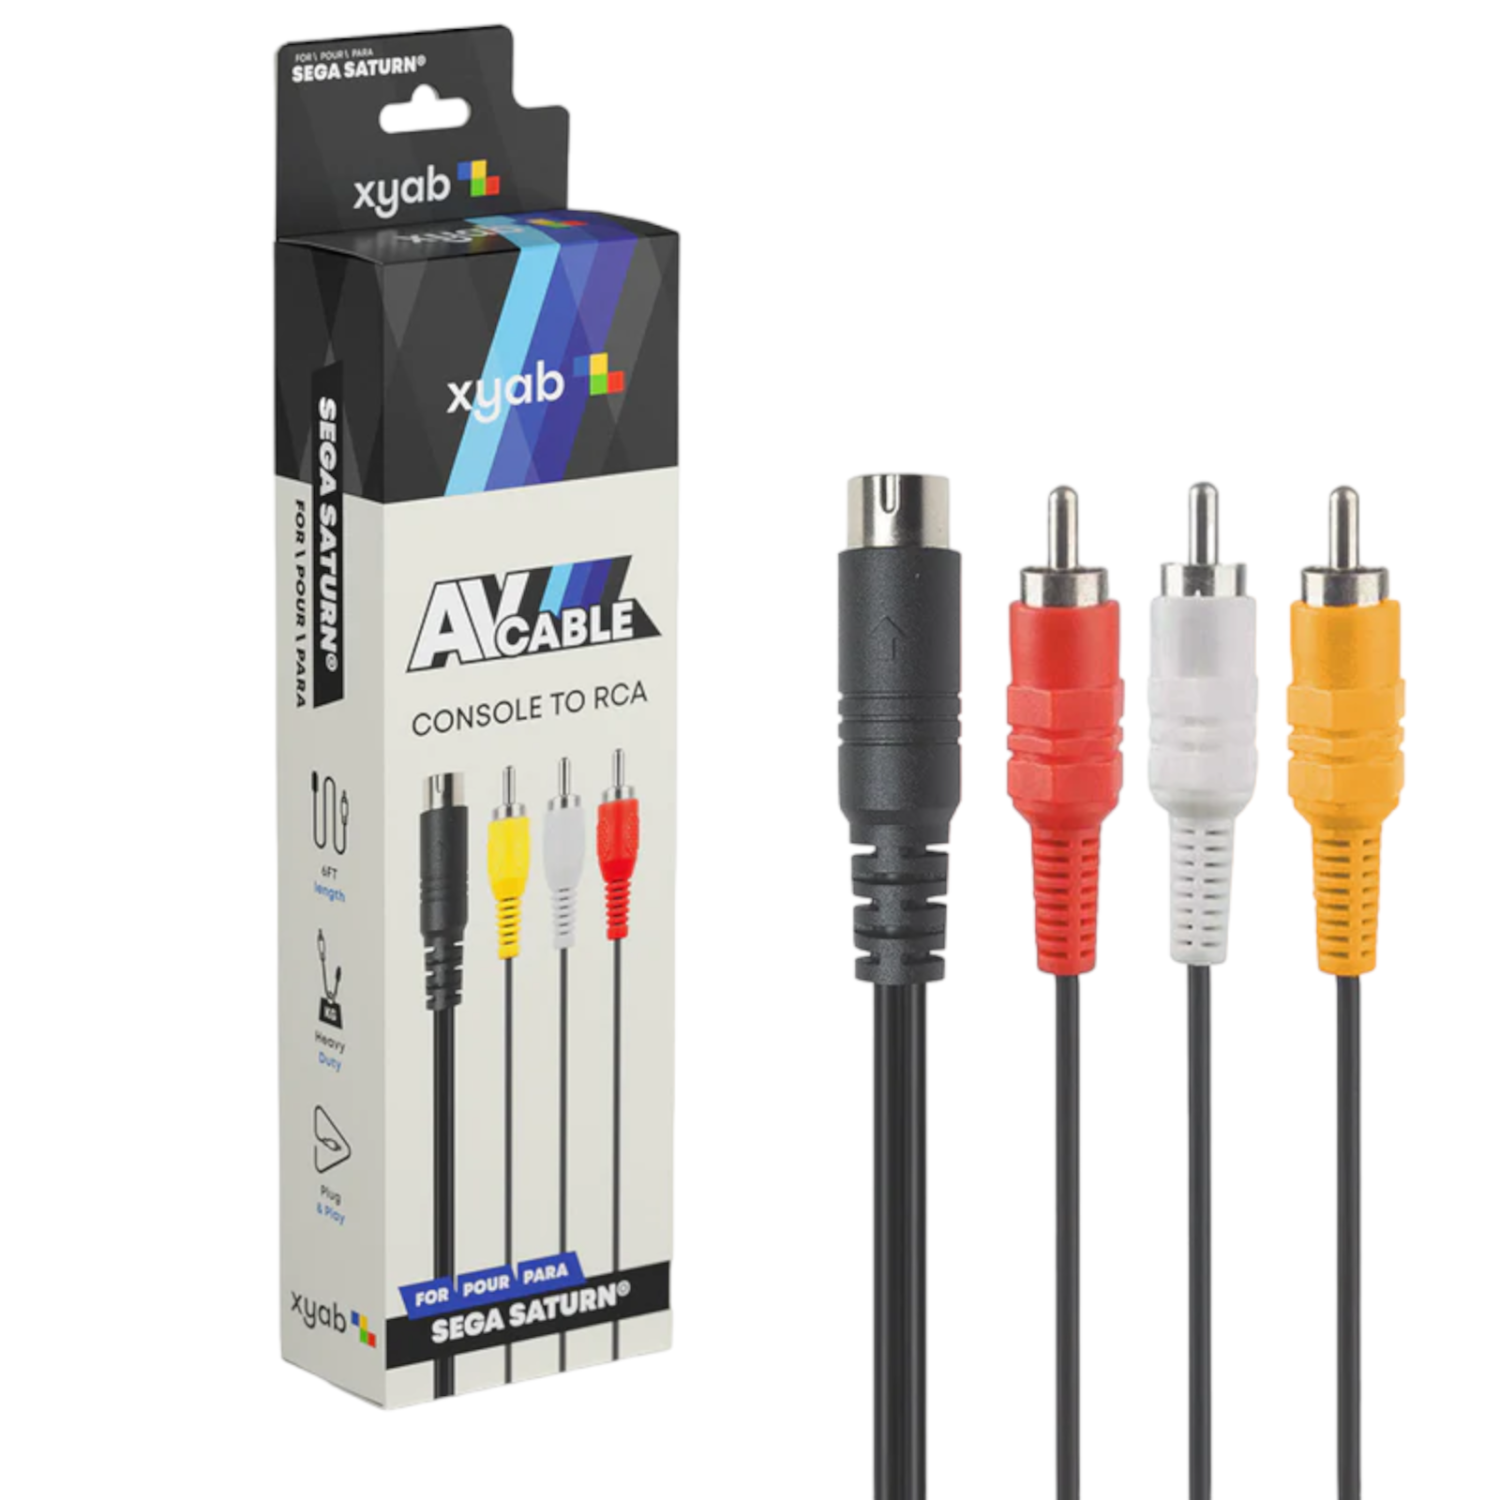 XYAB Composite AV Audio Video Cable for Sega Saturn